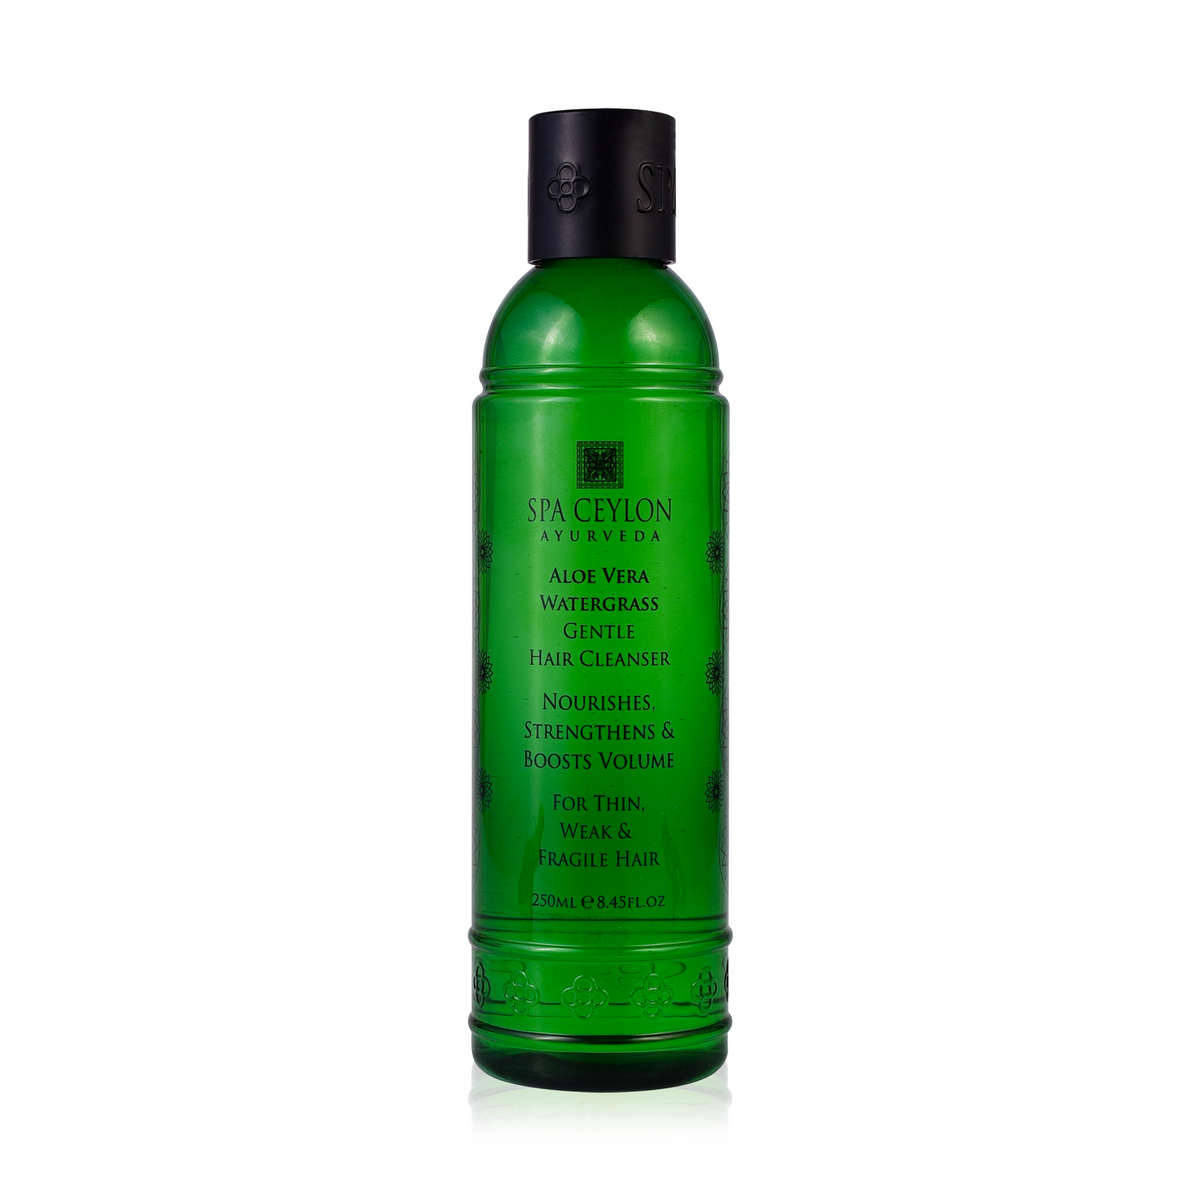 ALOE VERA WATERCRESS - Gentle Hair Cleanser - 250ml